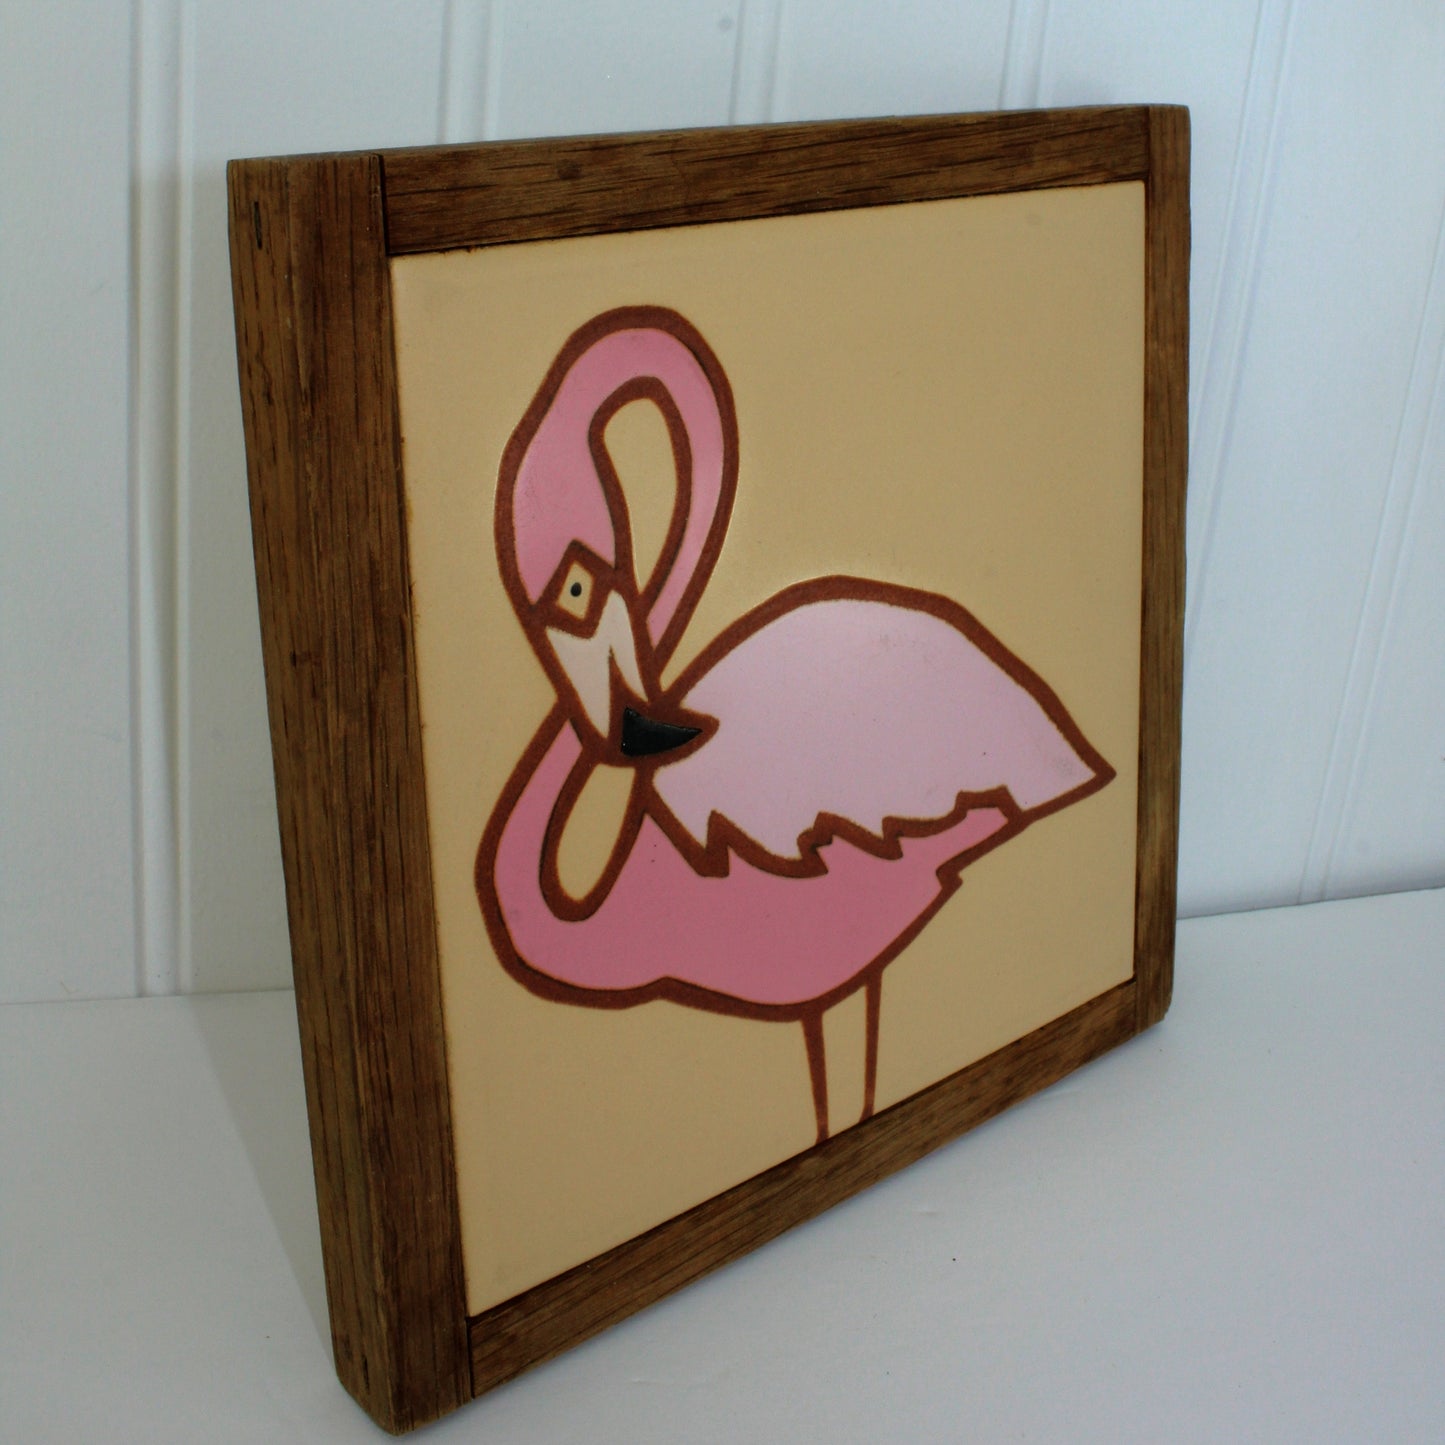 Glazin' Images Jane & Barb Tile Trivet - Flamingo series Wood Frame mod flamingo